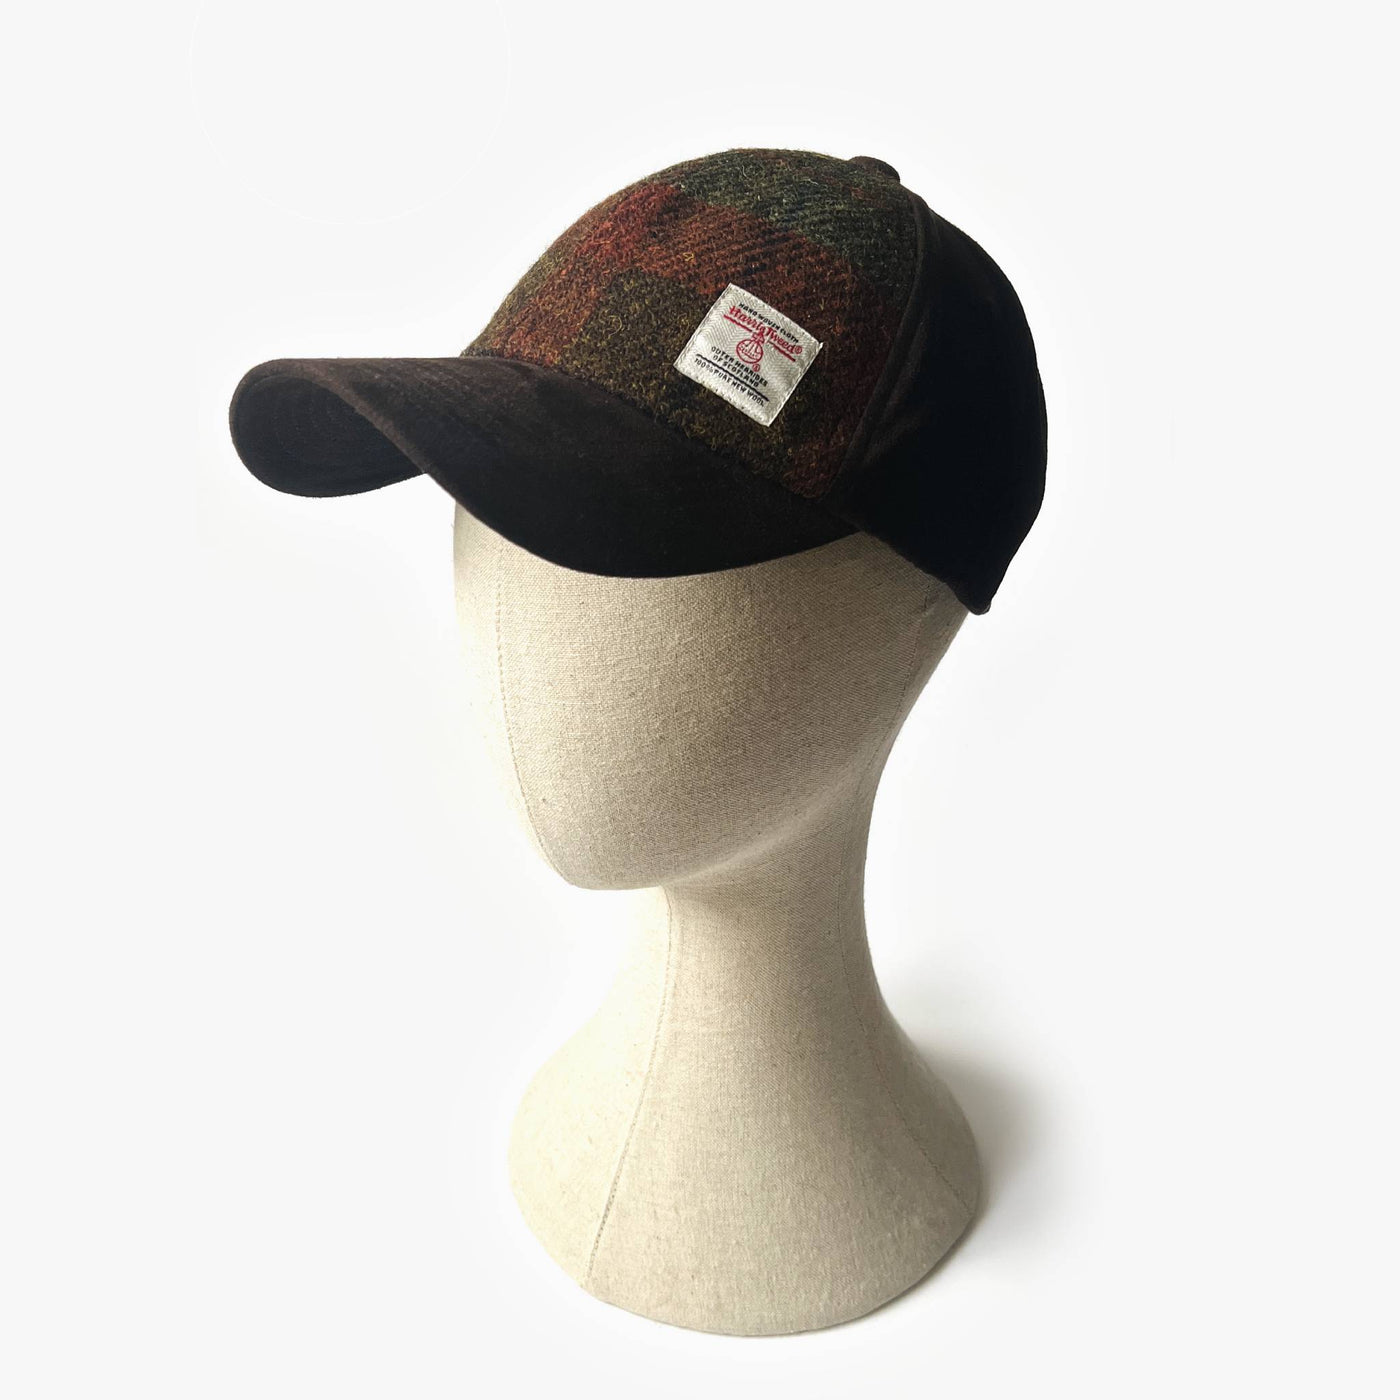 Harris Tweed® Baseball Cap - Green/Red Check - The Pretty Hat